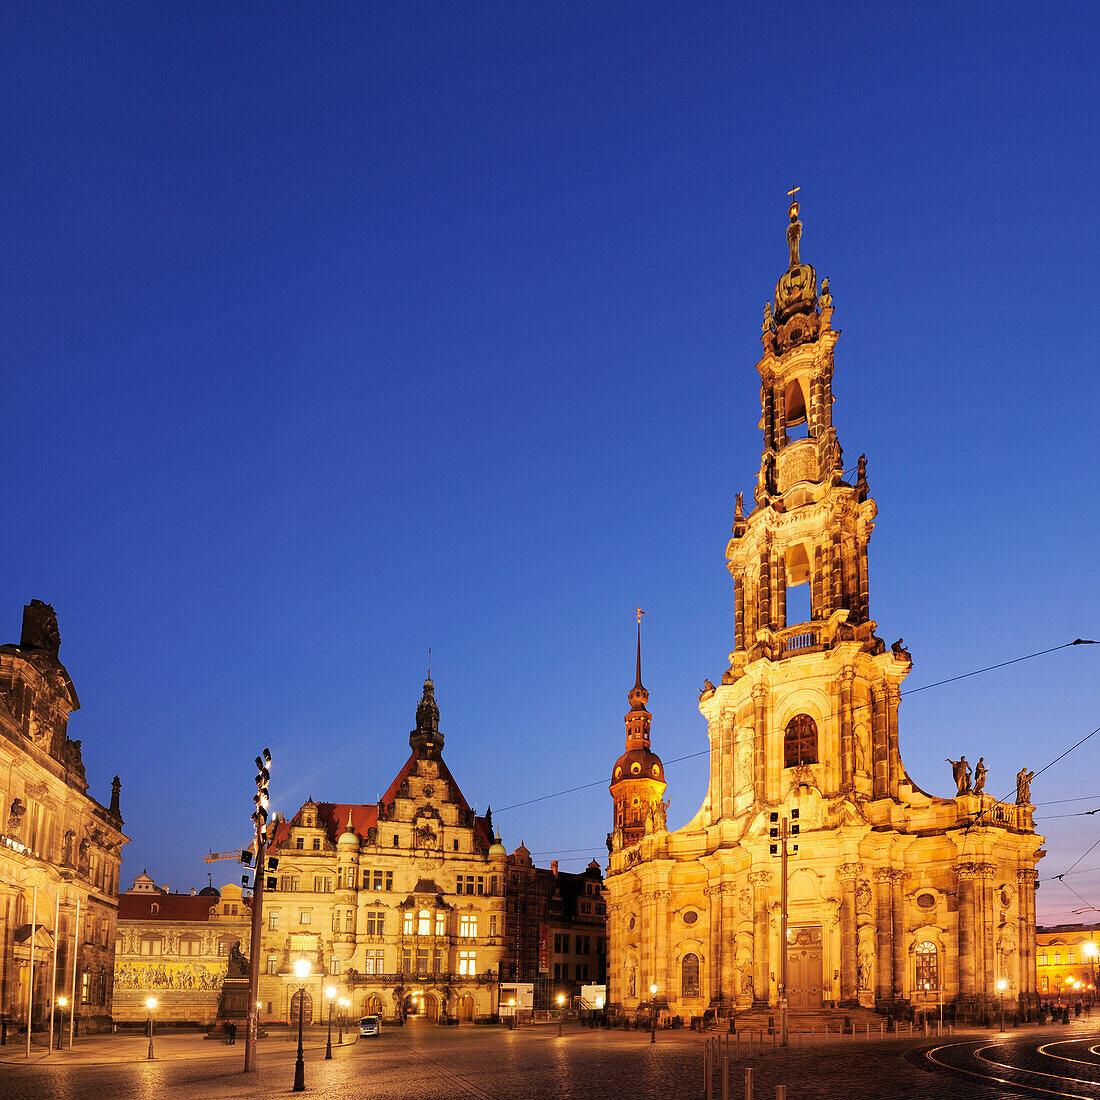 Illuminated Schlossplatz with Staendehaus, castle and cathedral, Schlossplatz, Dresden, Saxony, Germany, Europe